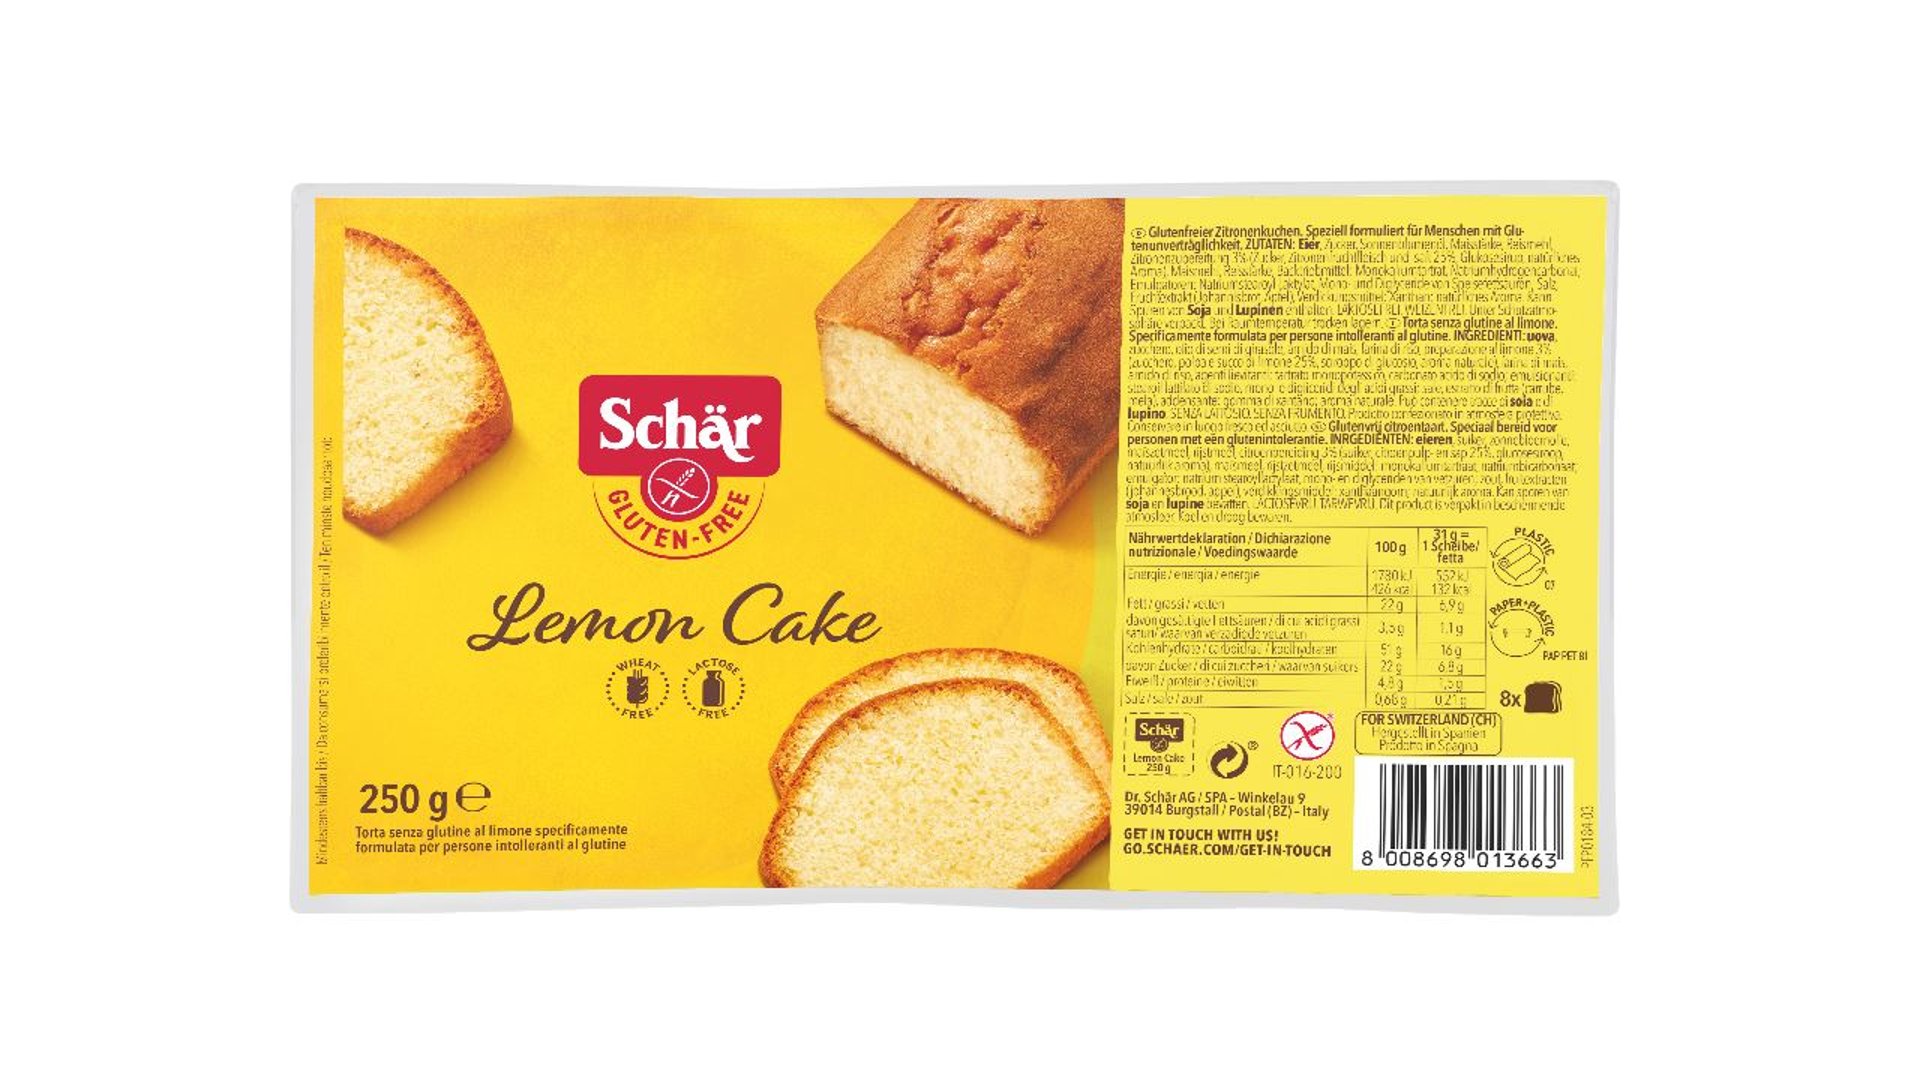 Schär - Lemon Cake glutenfrei - 250 g Packung